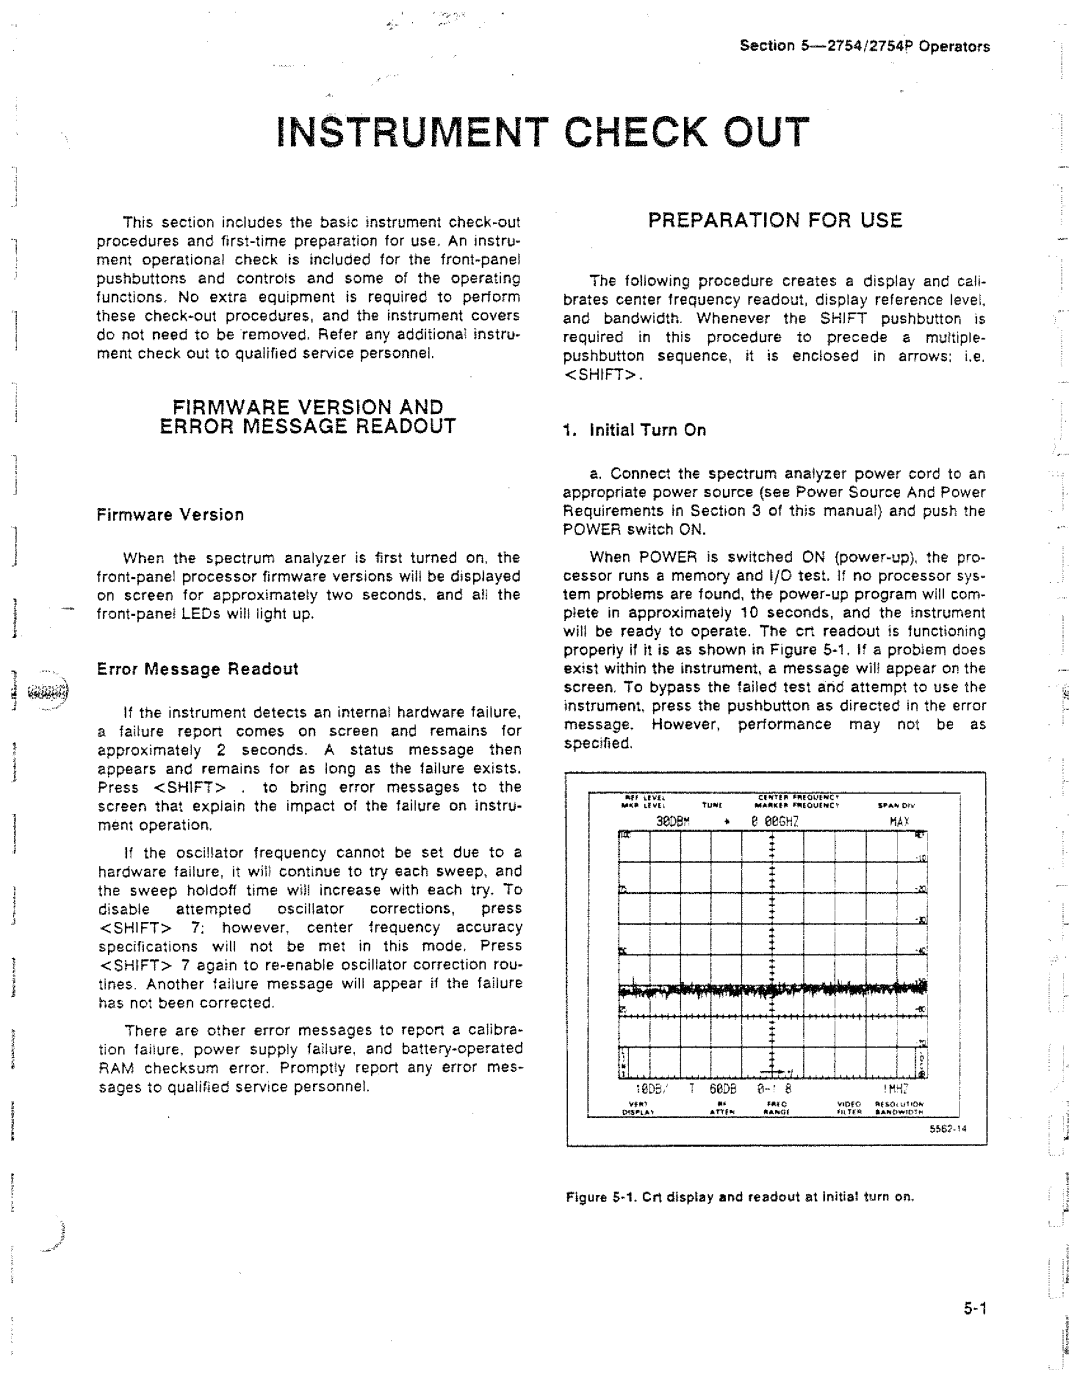 Tektronix 2754P manual 